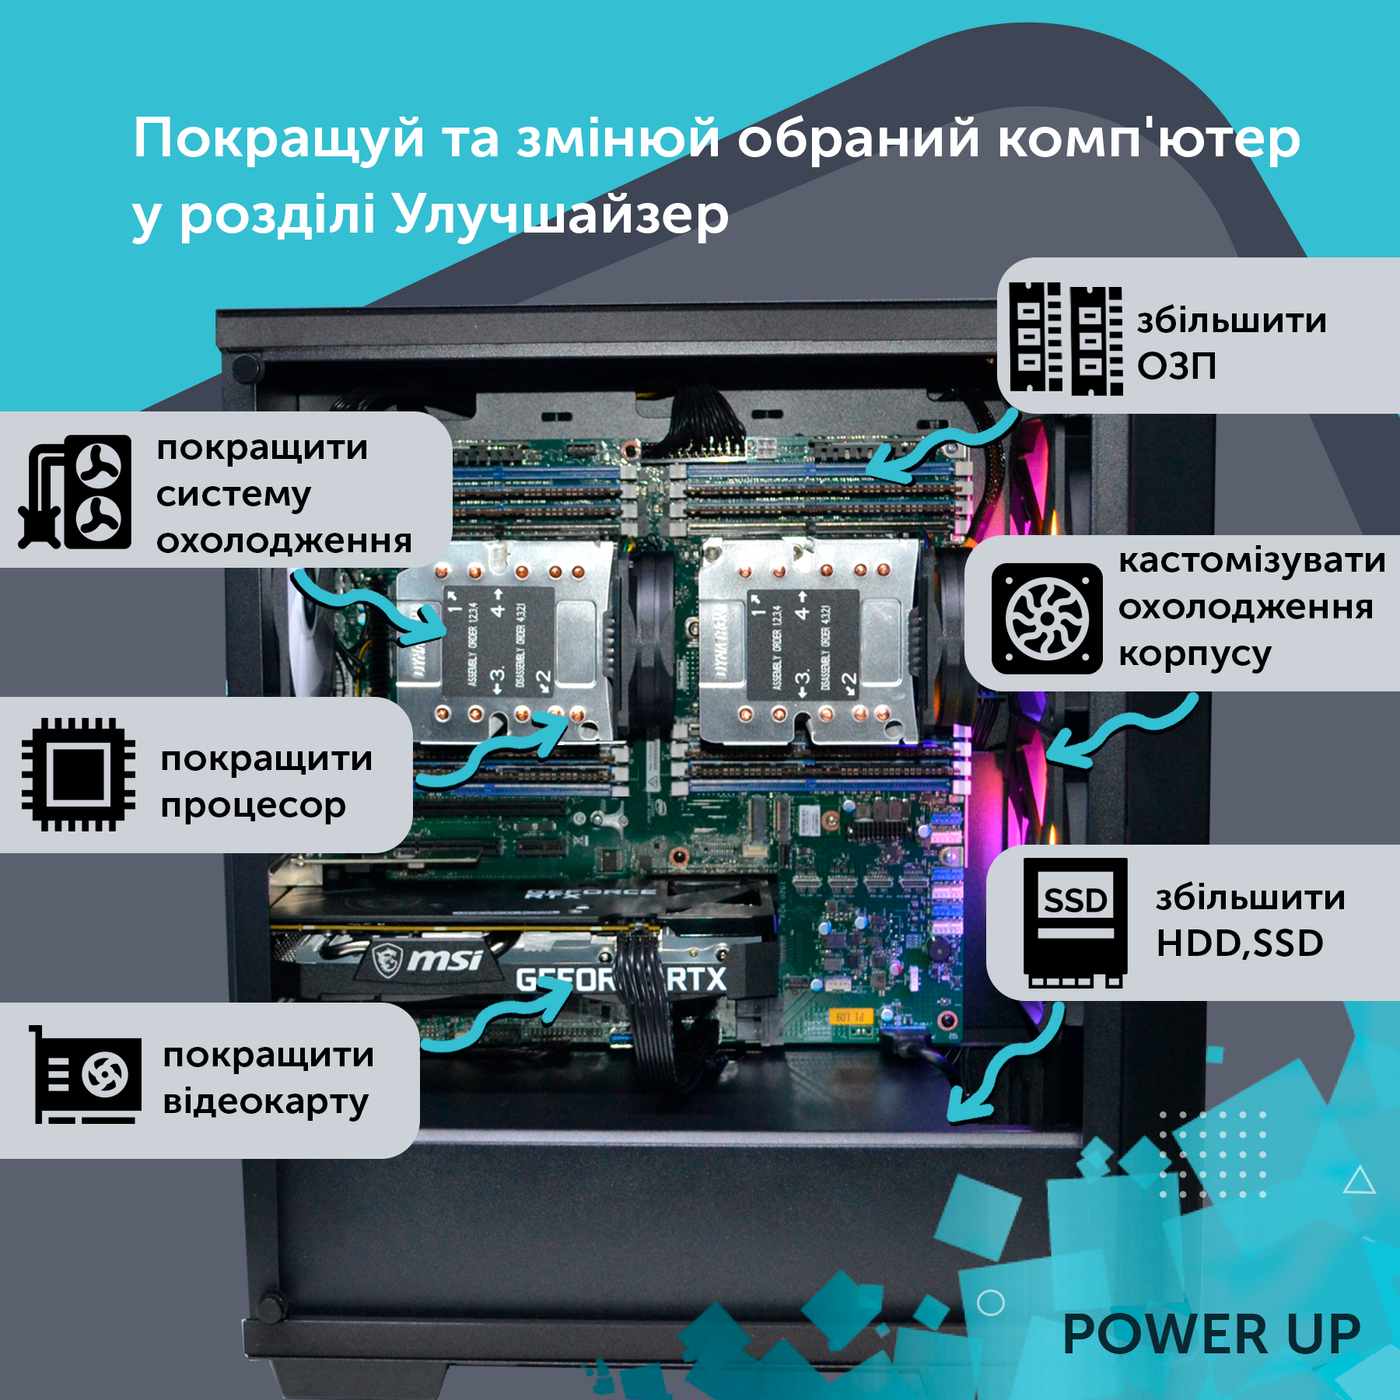 Двопроцесорна робоча станція PowerUp #127 Xeon E5 2690 v3 x2/32 GB/SSD 256GB/NVIDIA Quadro RTX A4000 16GB